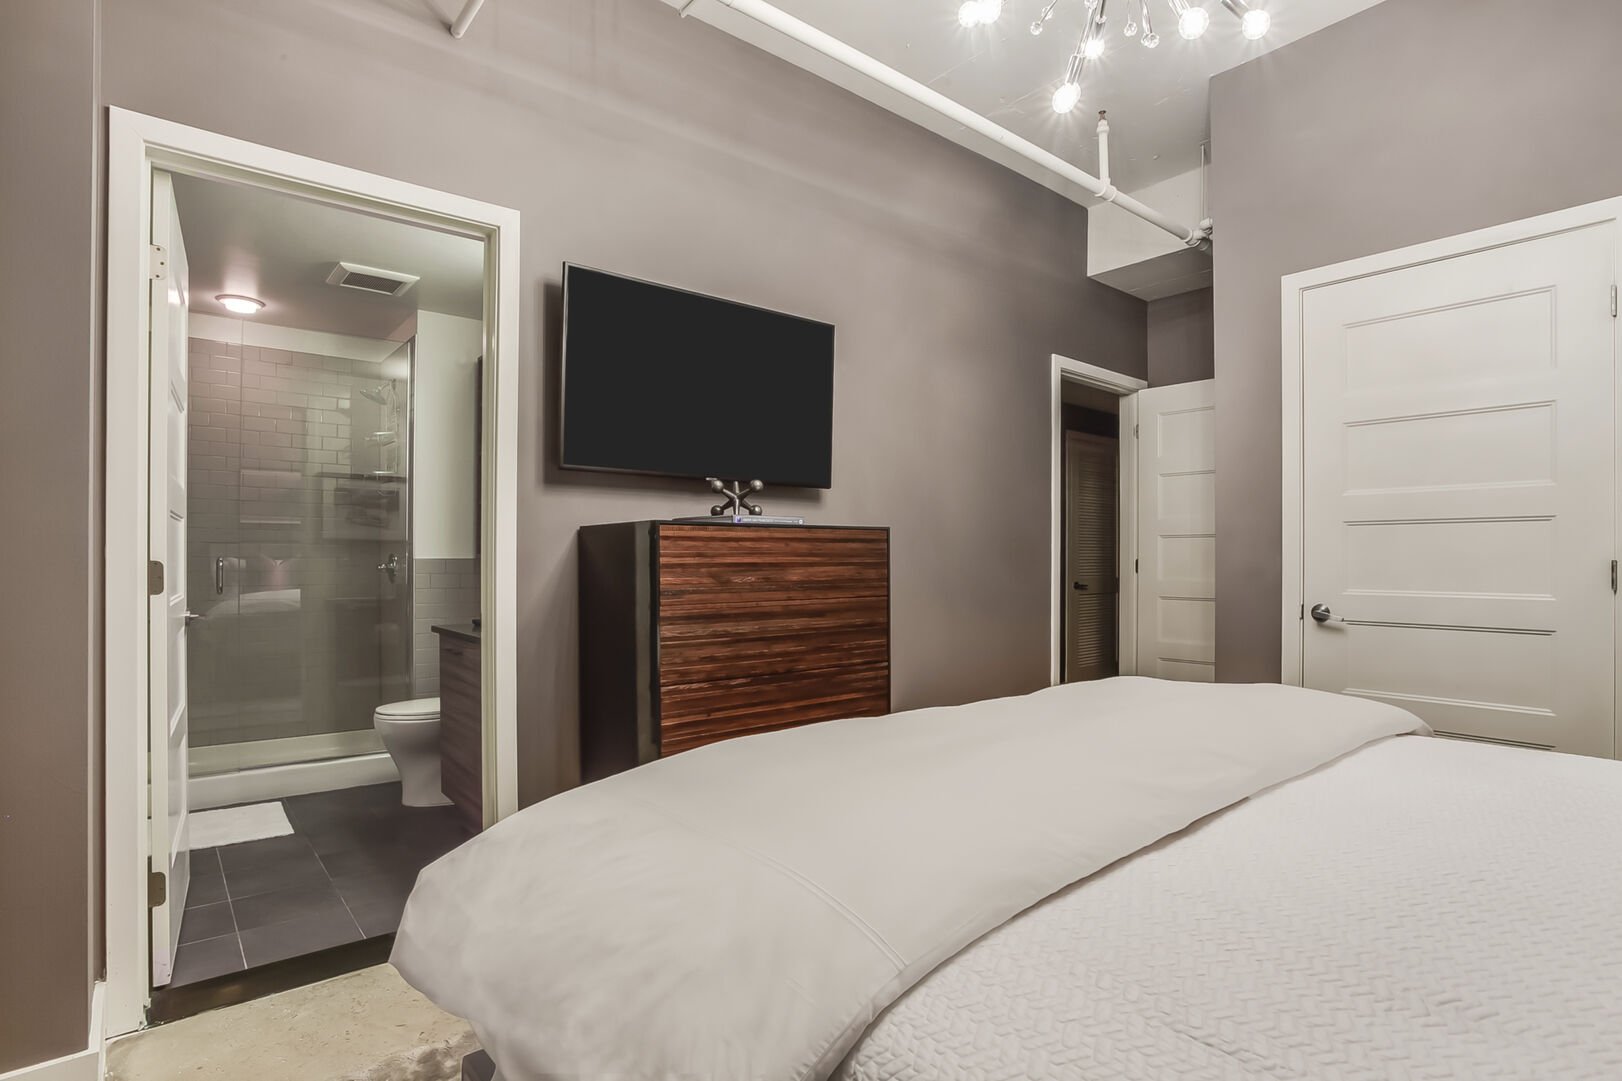 Master Bedroom with King Bed, TV, Dresser, and Ensuite Bathroom